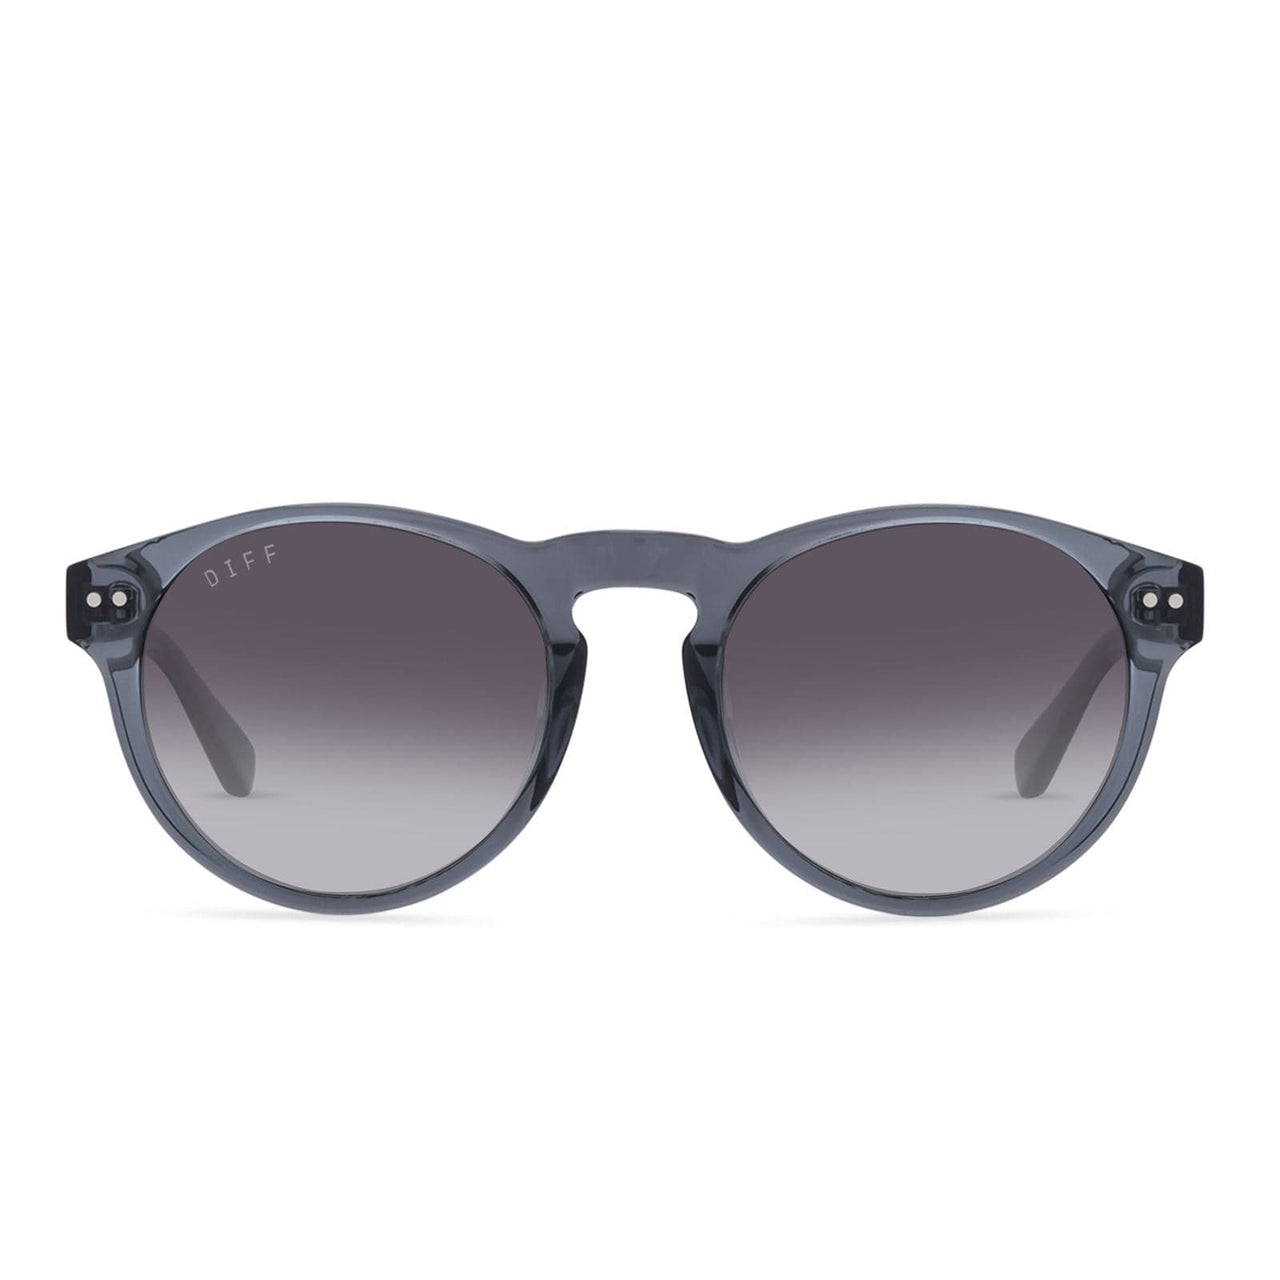 Cody Night Sky Grey Gradient Sunglasses, Sunglasses by DIFF Sunglasses | LIT Boutique